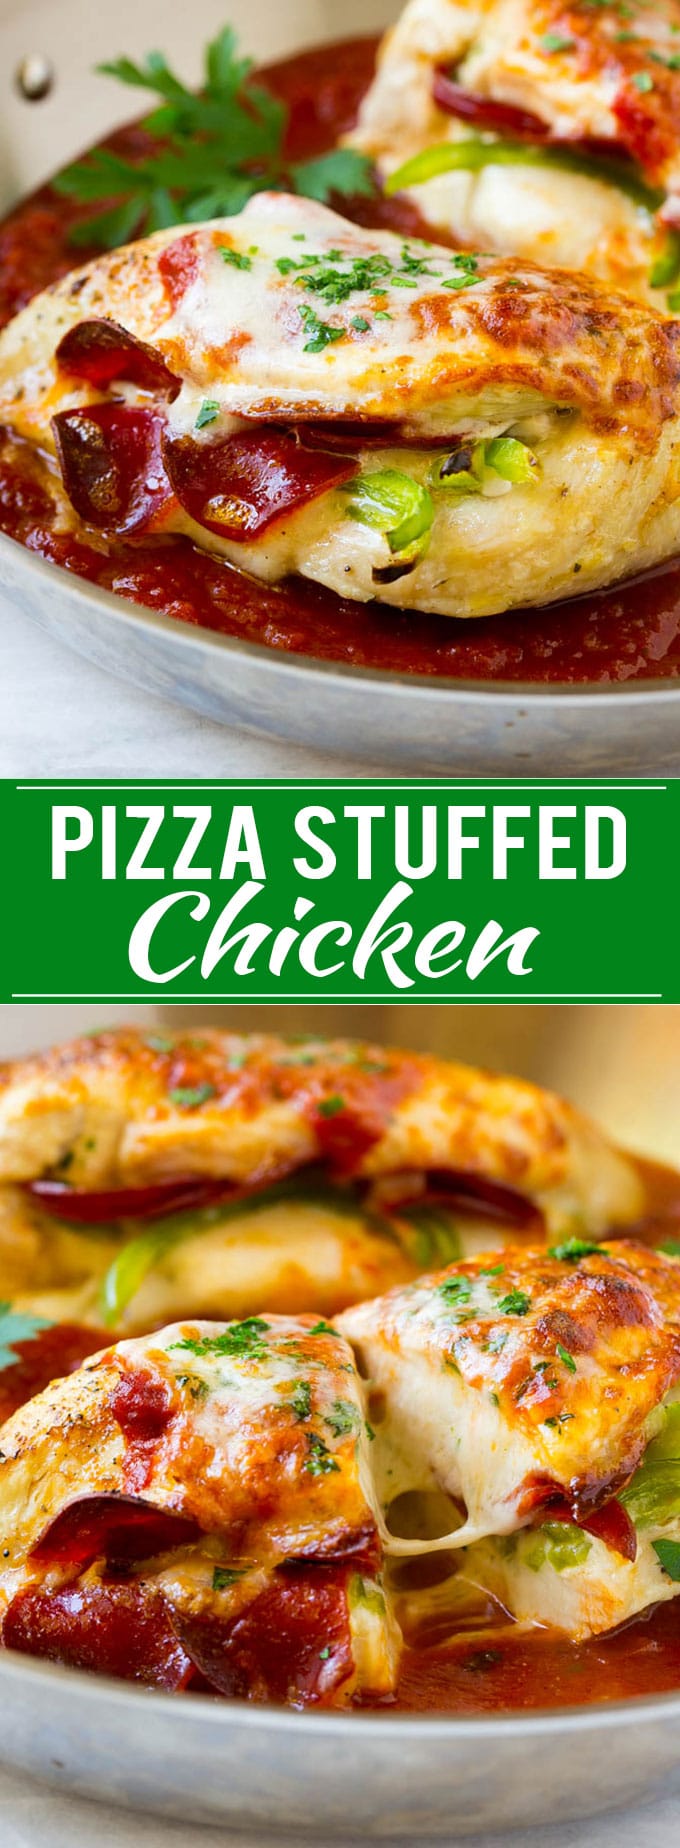 Pizza Stuffed Chicken Recipe | Stuffed Chicken Breast | Baked Chicken Breast | Easy Chicken Recipe #chicken #pizza #stuffedchicken #chickenbreast #dinner #dinneratthezoo